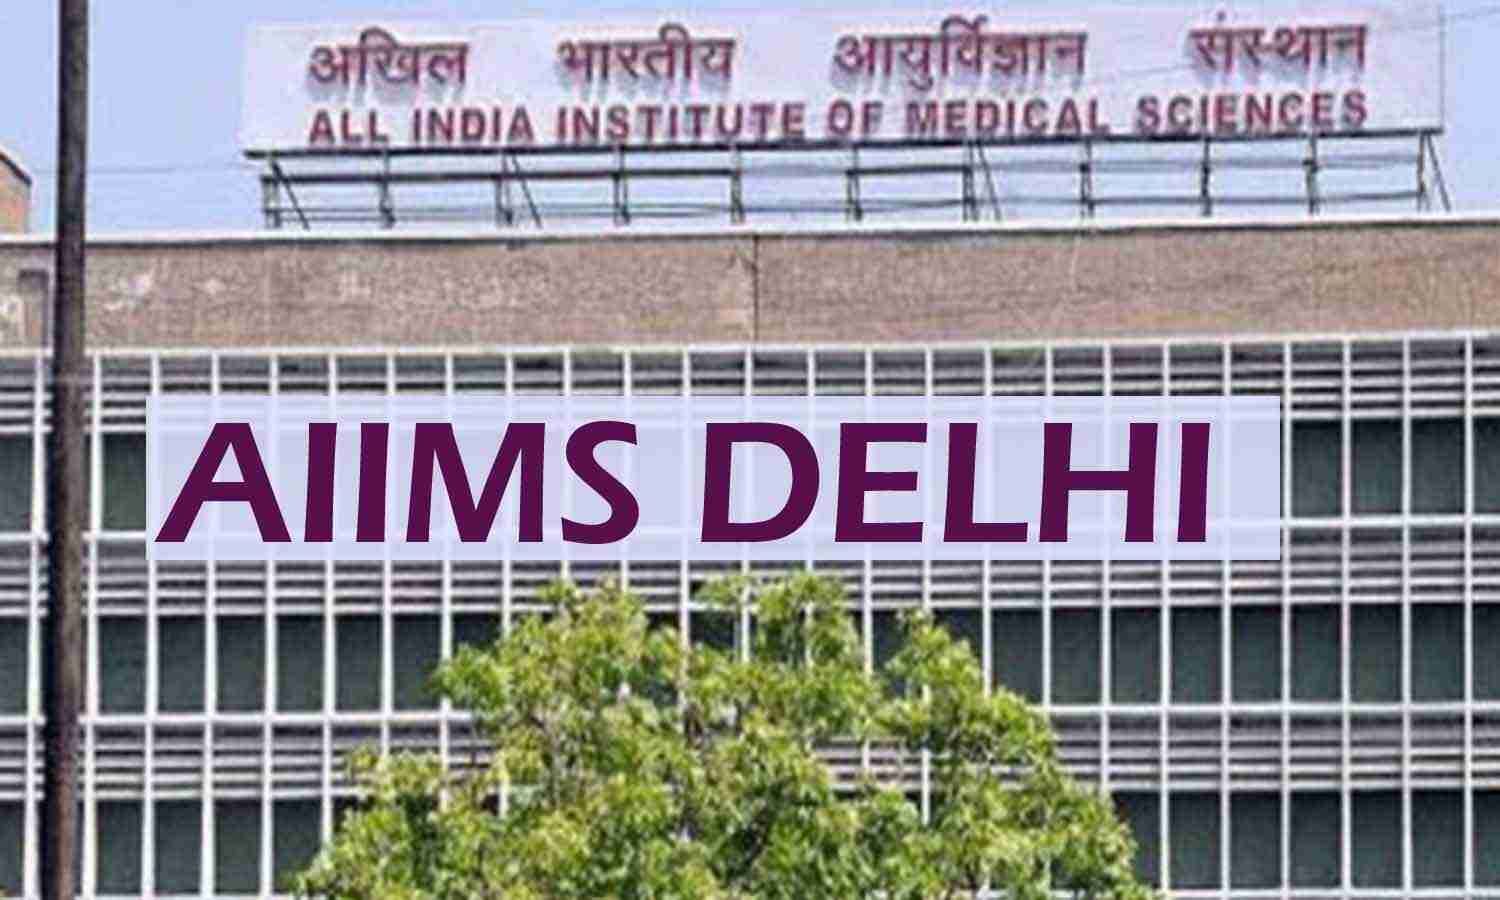 Delhi AIIMS: دہلی ایمس اور آر ایم ایل میں آدھے دن کی ہوگی چھٹی ،  رام منوہر لوہیا اسپتال میں او پی ڈی رجسٹریشن کاؤنٹر دوپہر 1:30 بجے کے بعد کھلیں گے